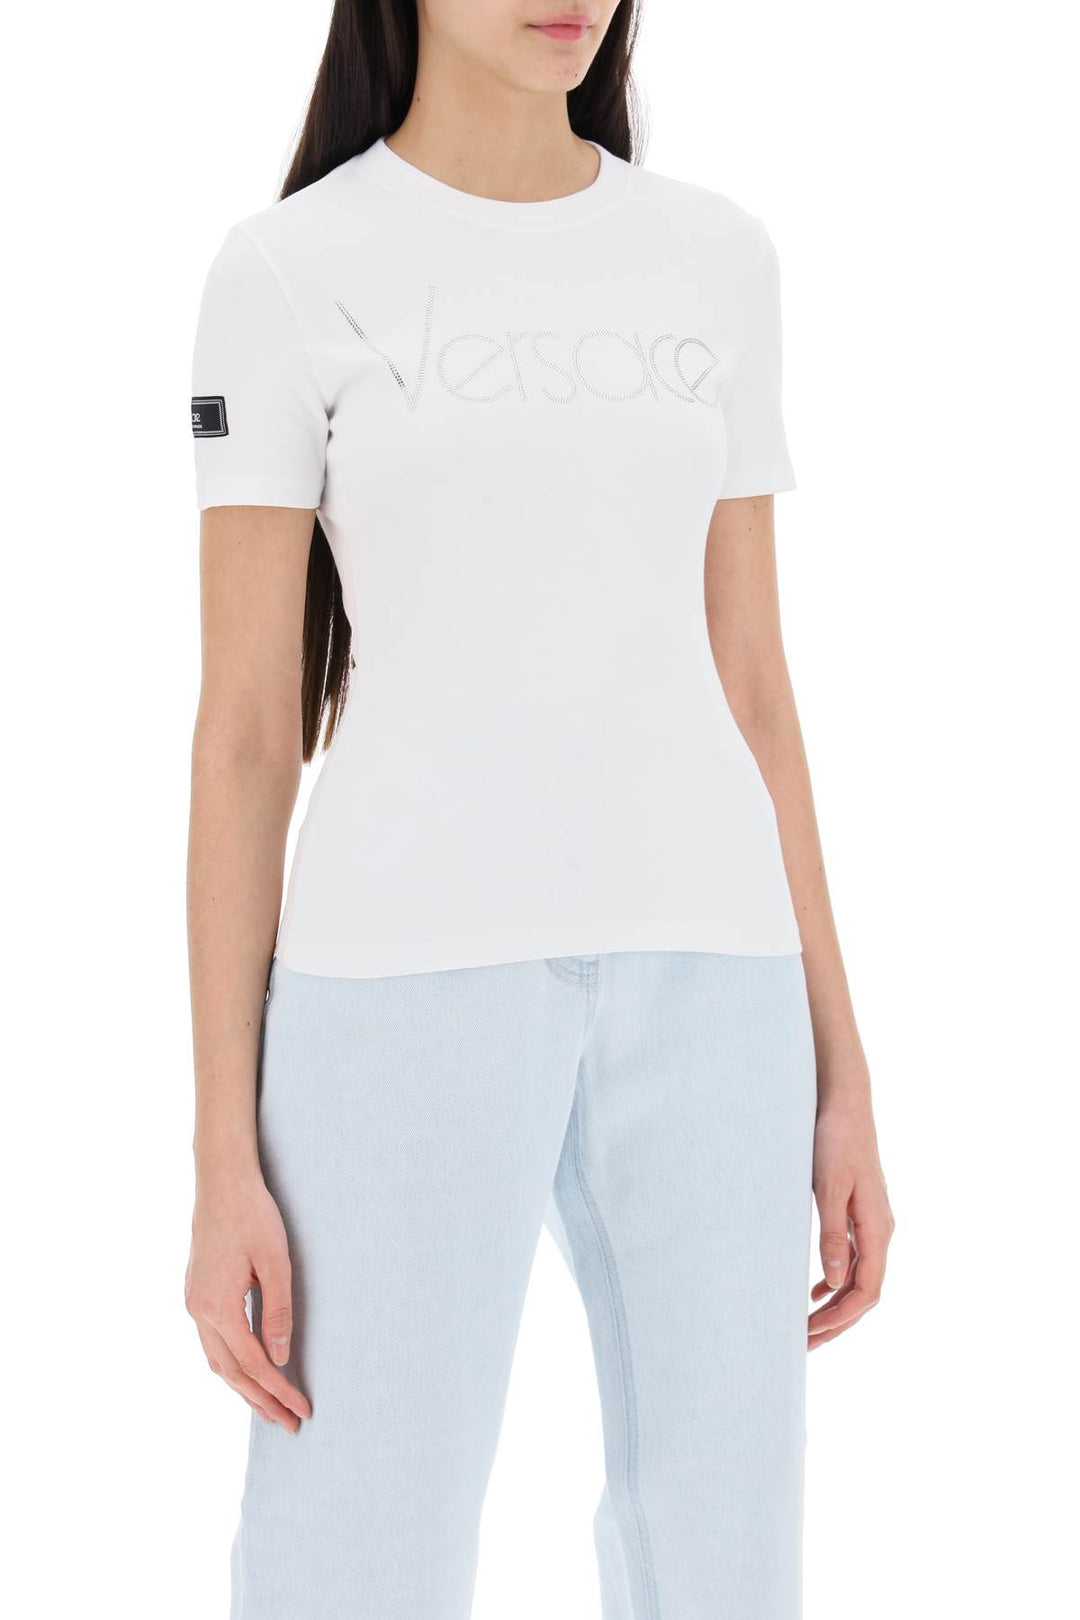 Versace Replace With Double Quotelogo Rhinestone T Shirt   Bianco